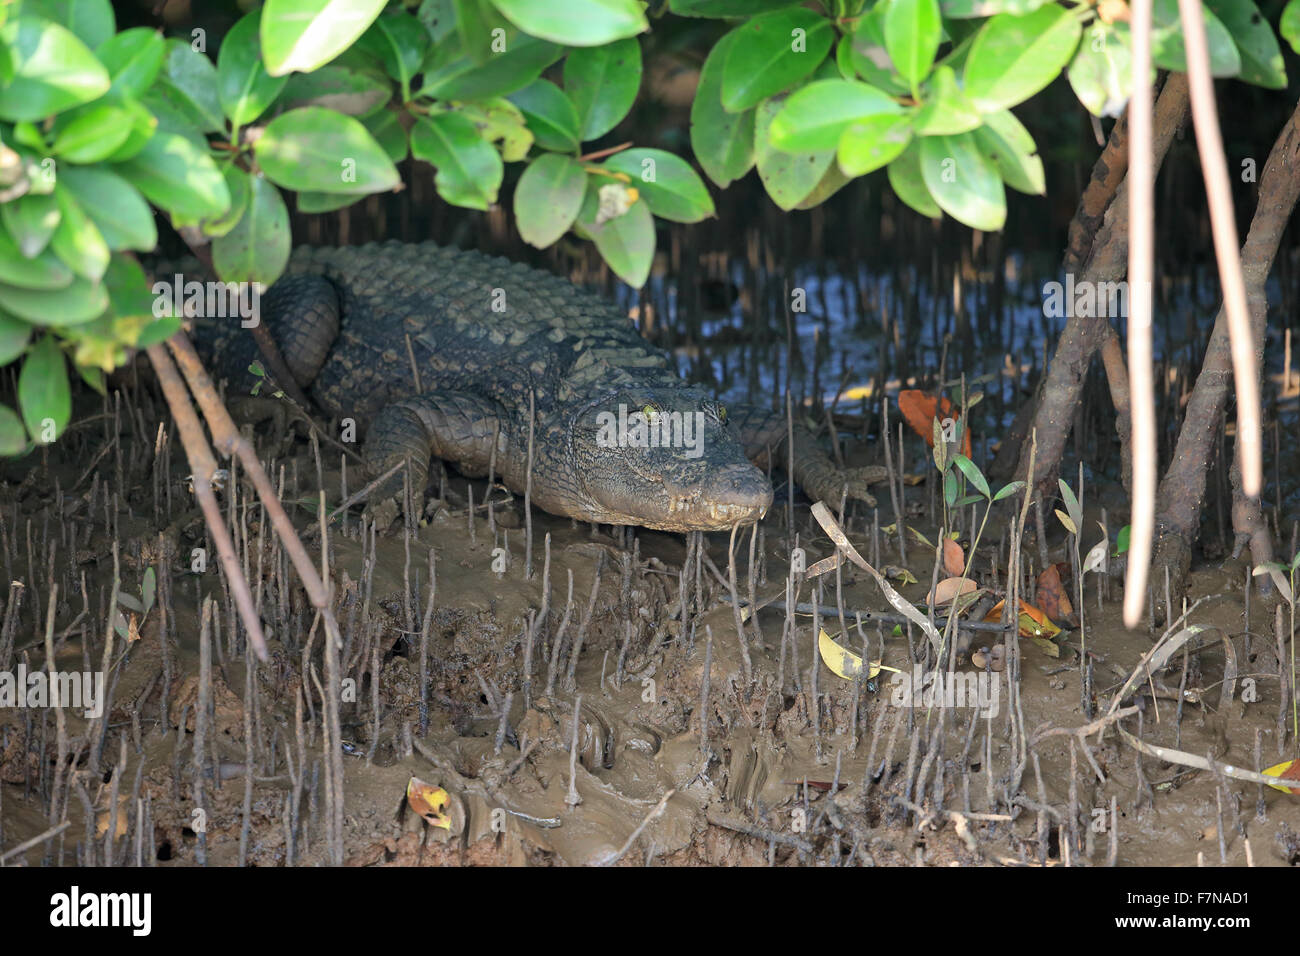 Mugger Crocodile (Crocodylus palustris) Stock Photo